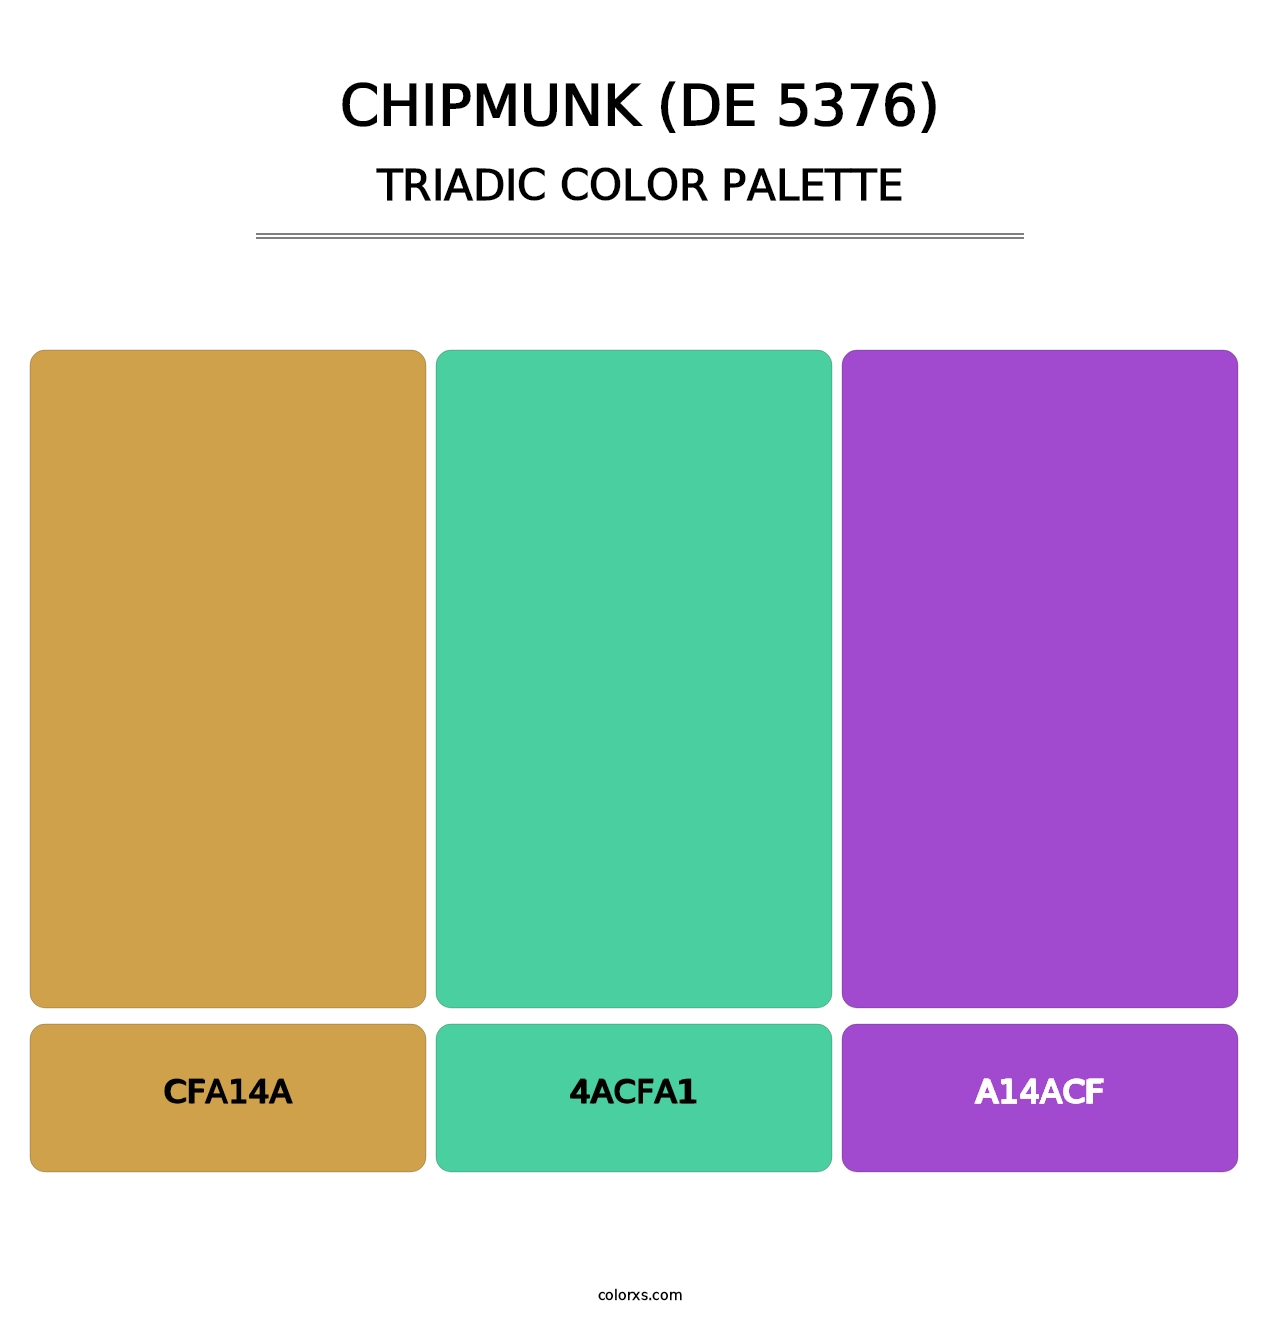 Chipmunk (DE 5376) - Triadic Color Palette